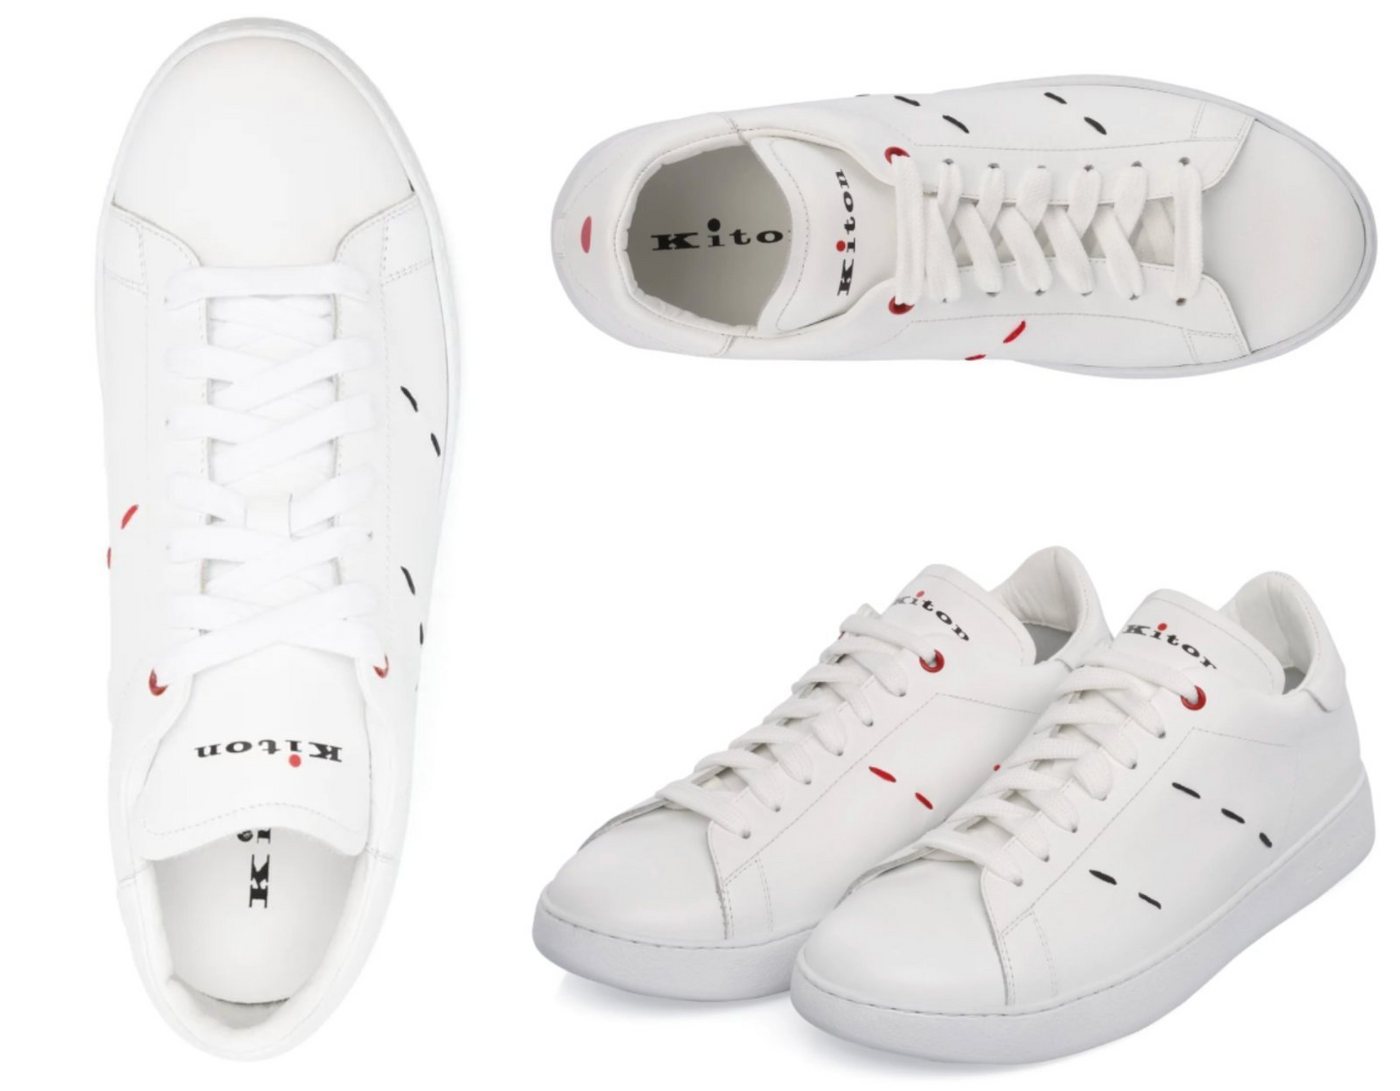 Kiton KITON Top-Stitched Leather Ciro Paone Sneakers Runners Schuhe Shoes Tr Sneaker von Kiton